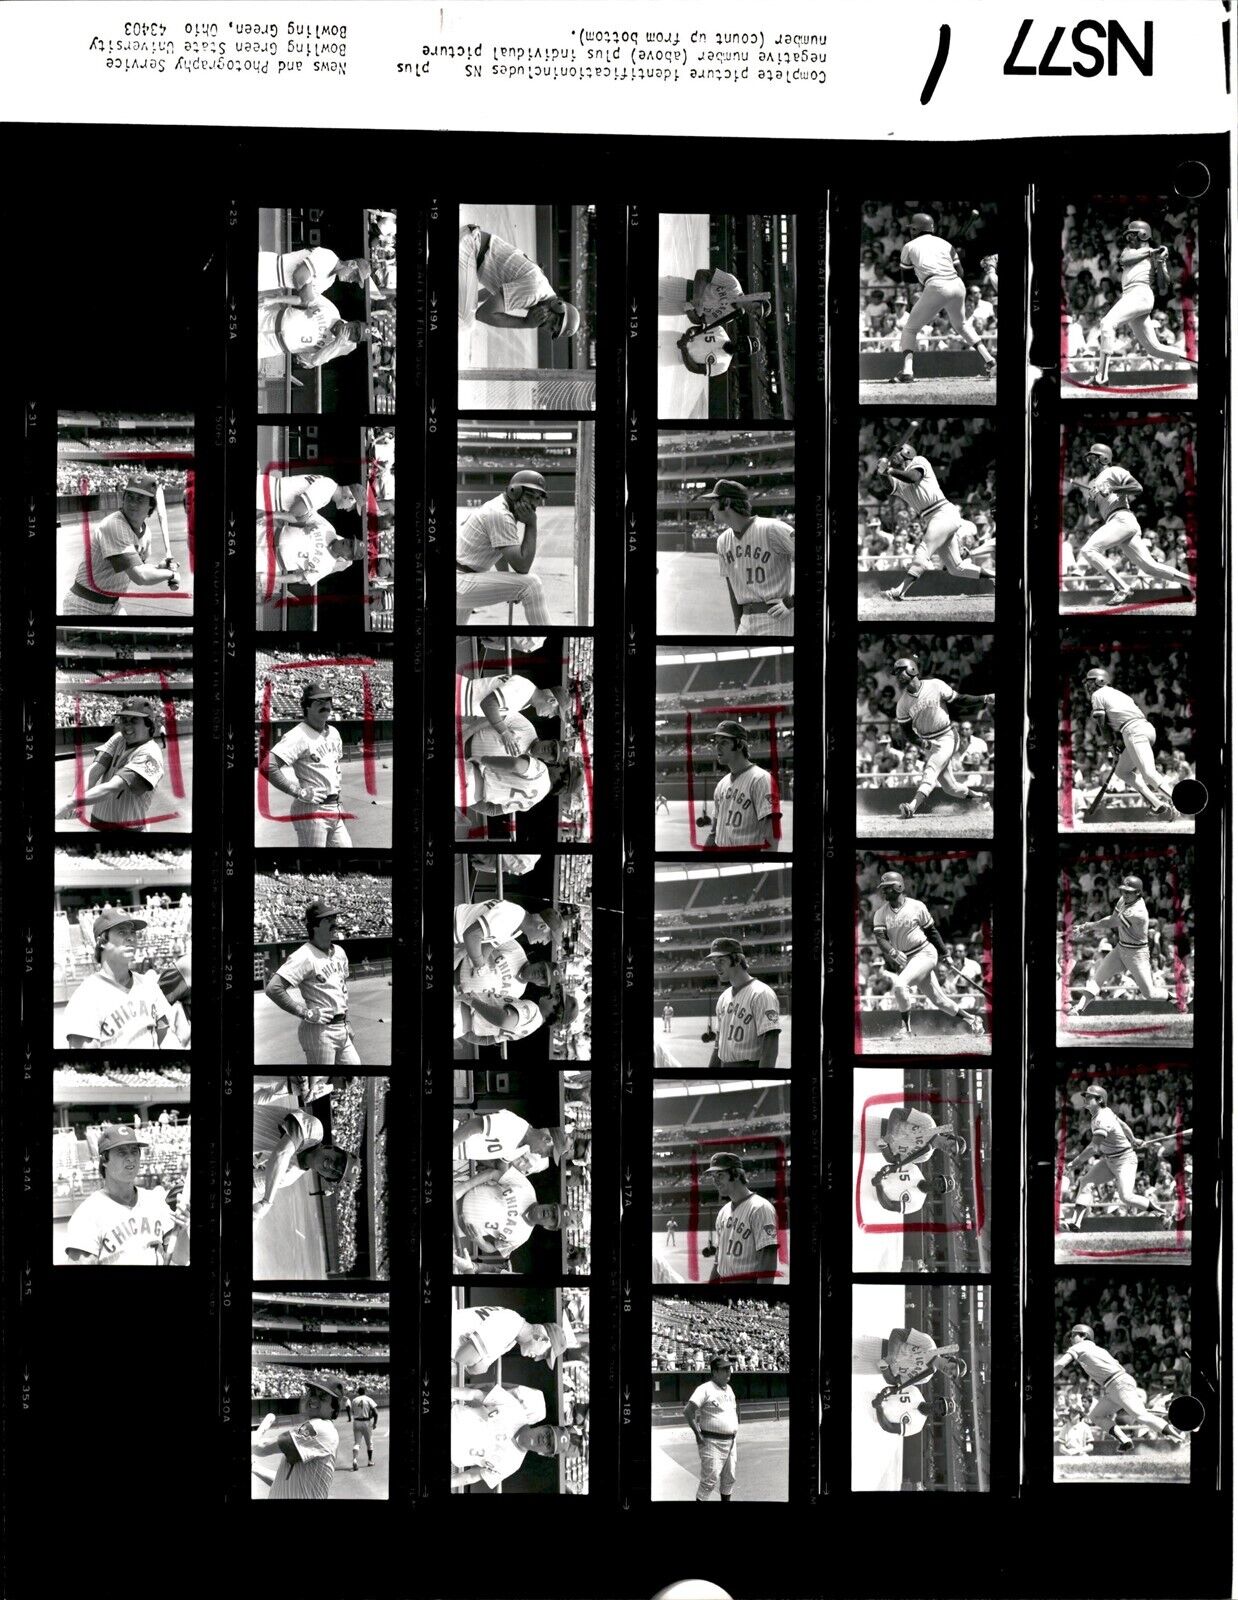 LD345 \'78 Orig Contact Sheet Photo DAVE KINGMAN BOBBY MURCER CHICAGO CUBS ROYALS